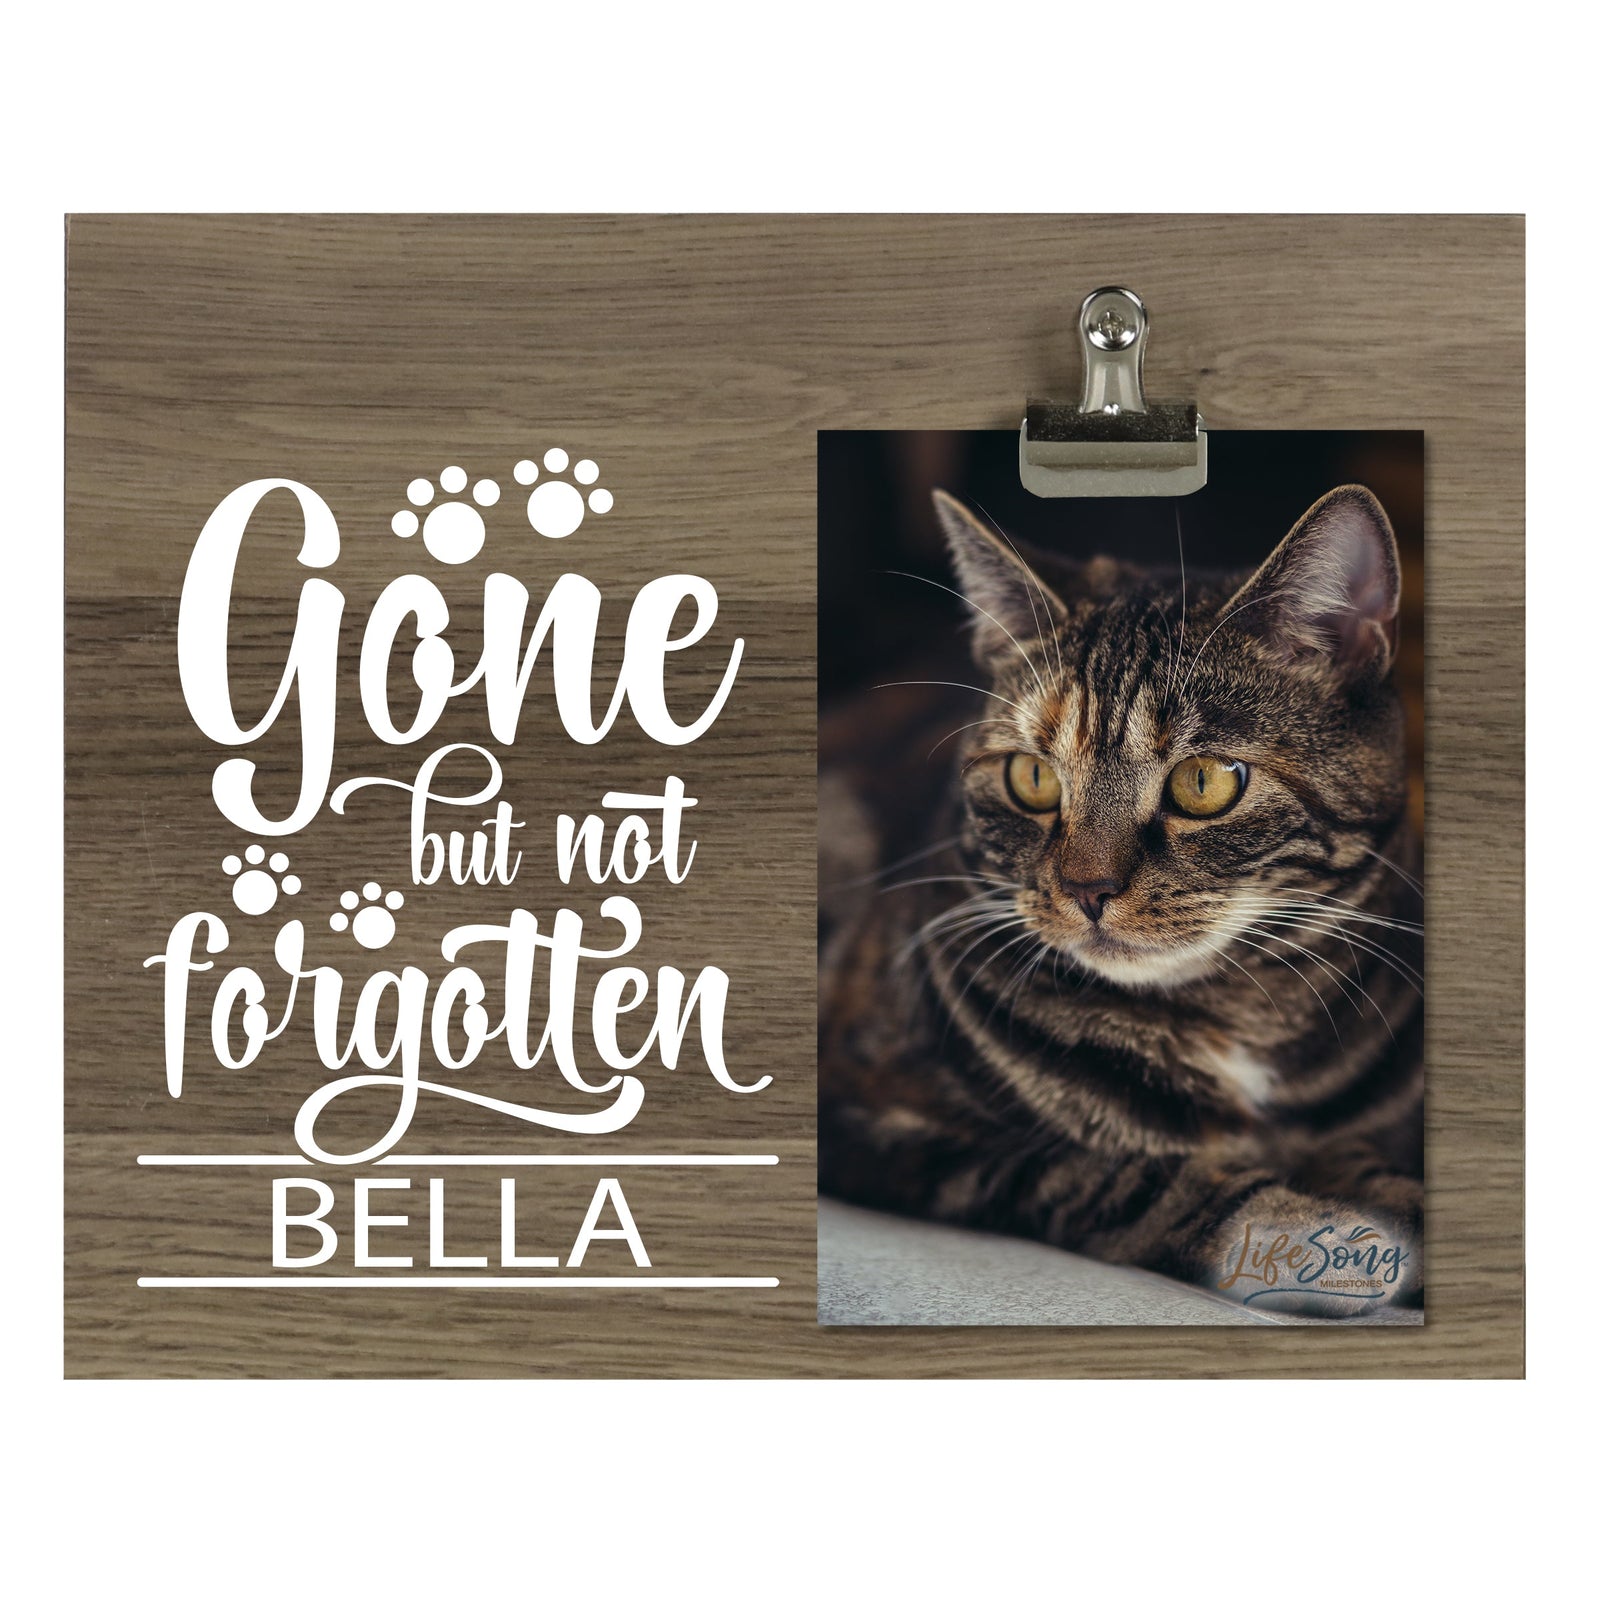 Pet Memorial Photo Clip Board - Gone But Not Forgotten